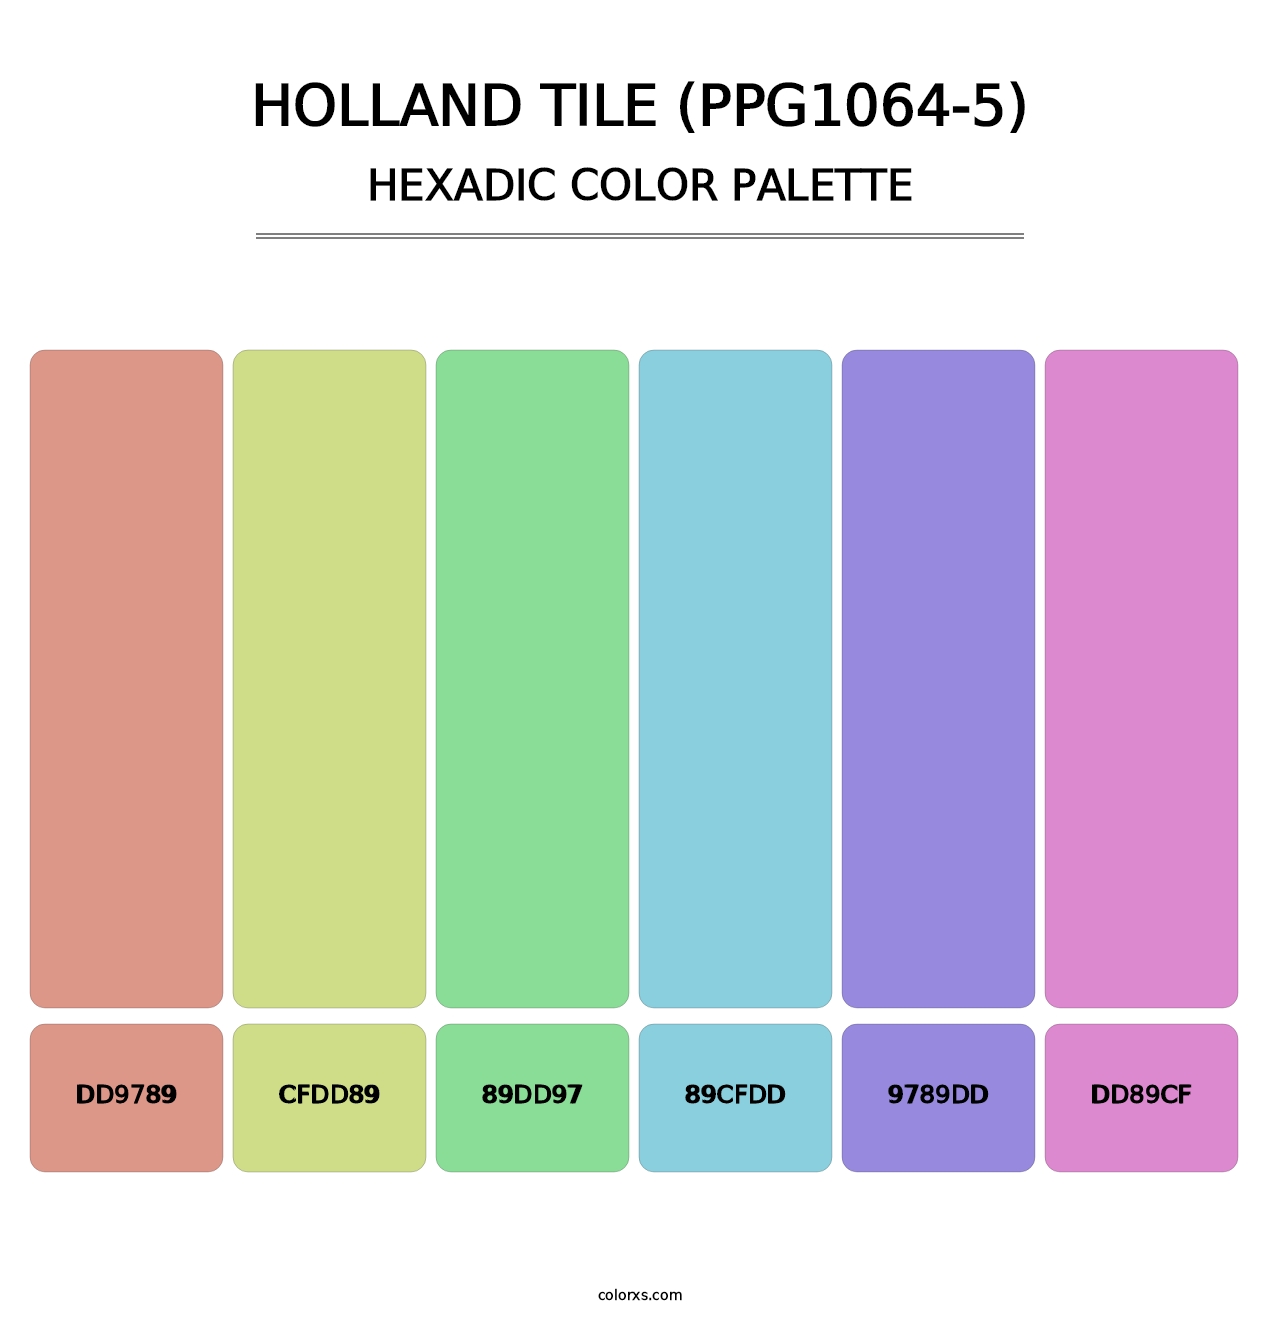 Holland Tile (PPG1064-5) - Hexadic Color Palette